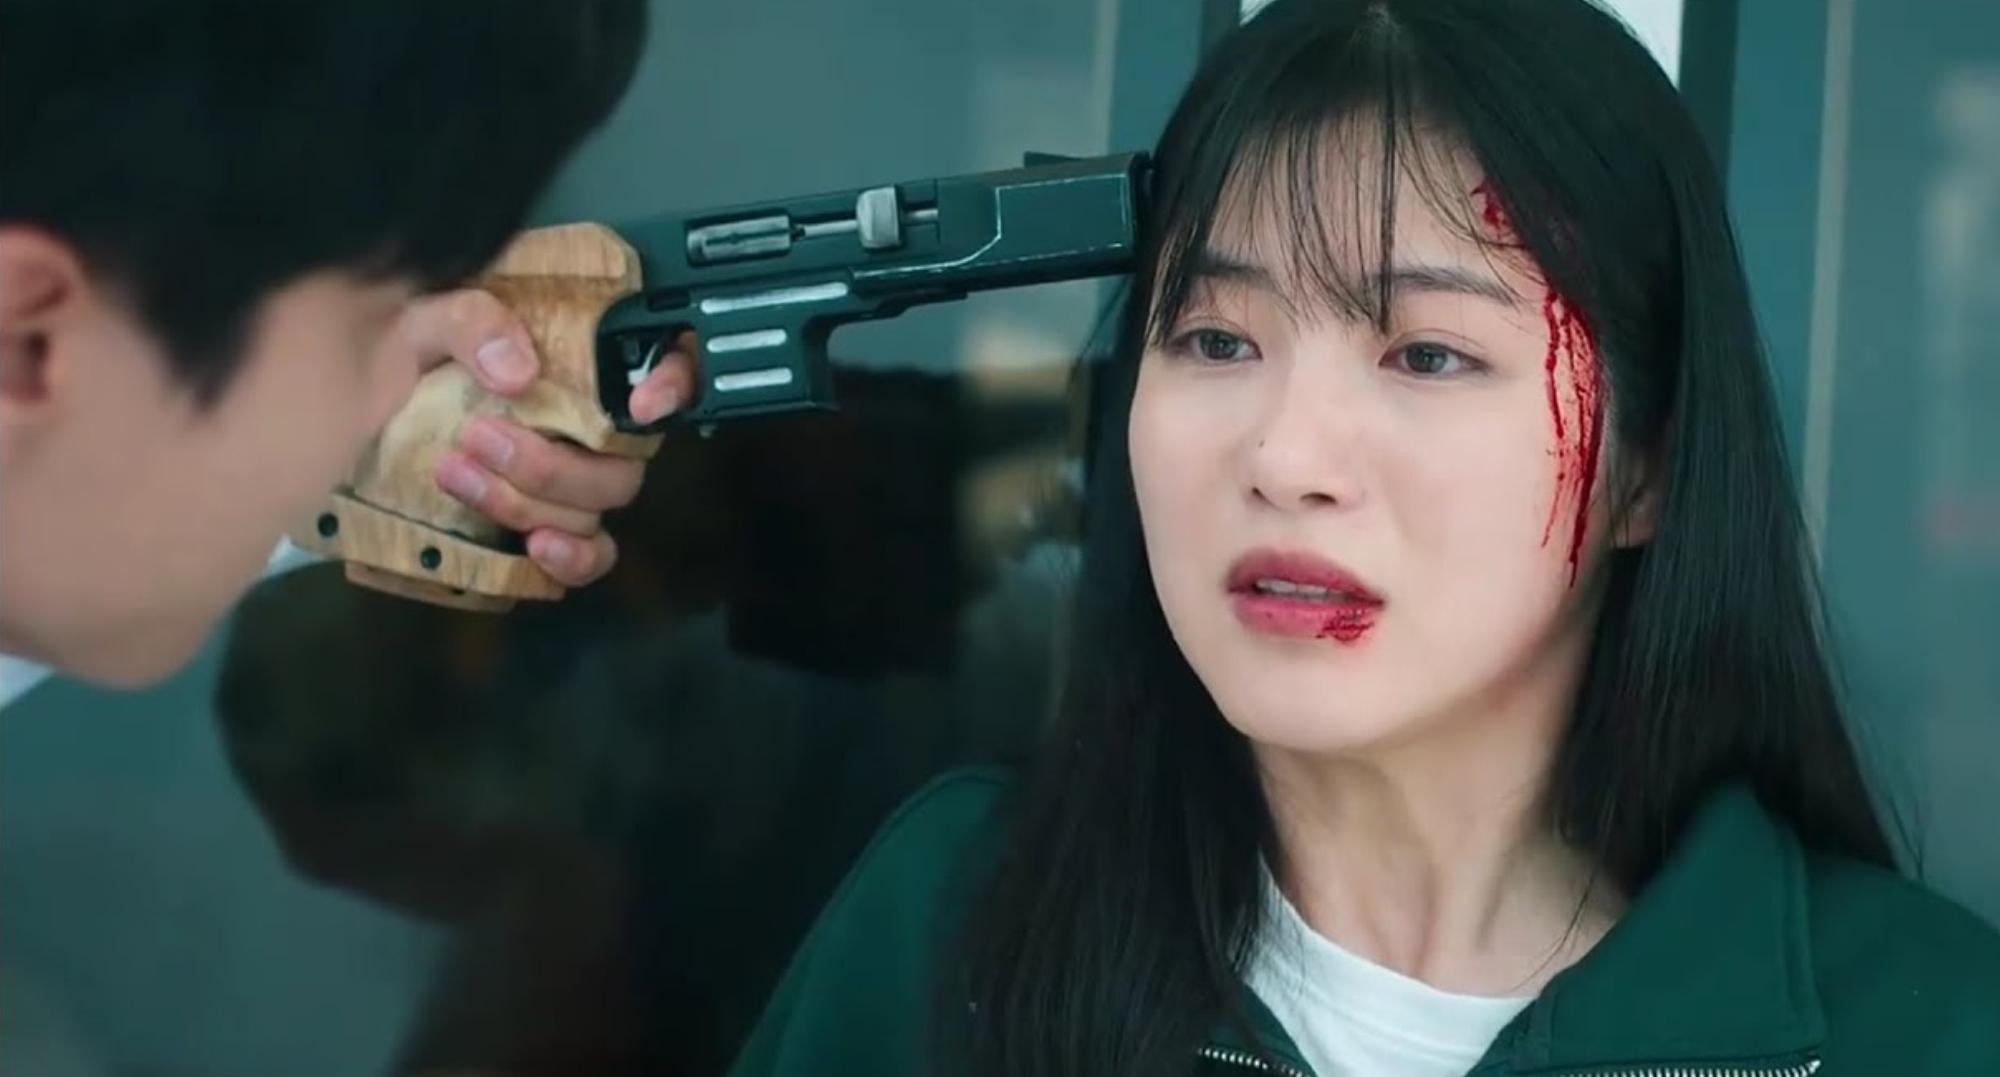 Chan-mi held at gunpoint by Jae-jin in